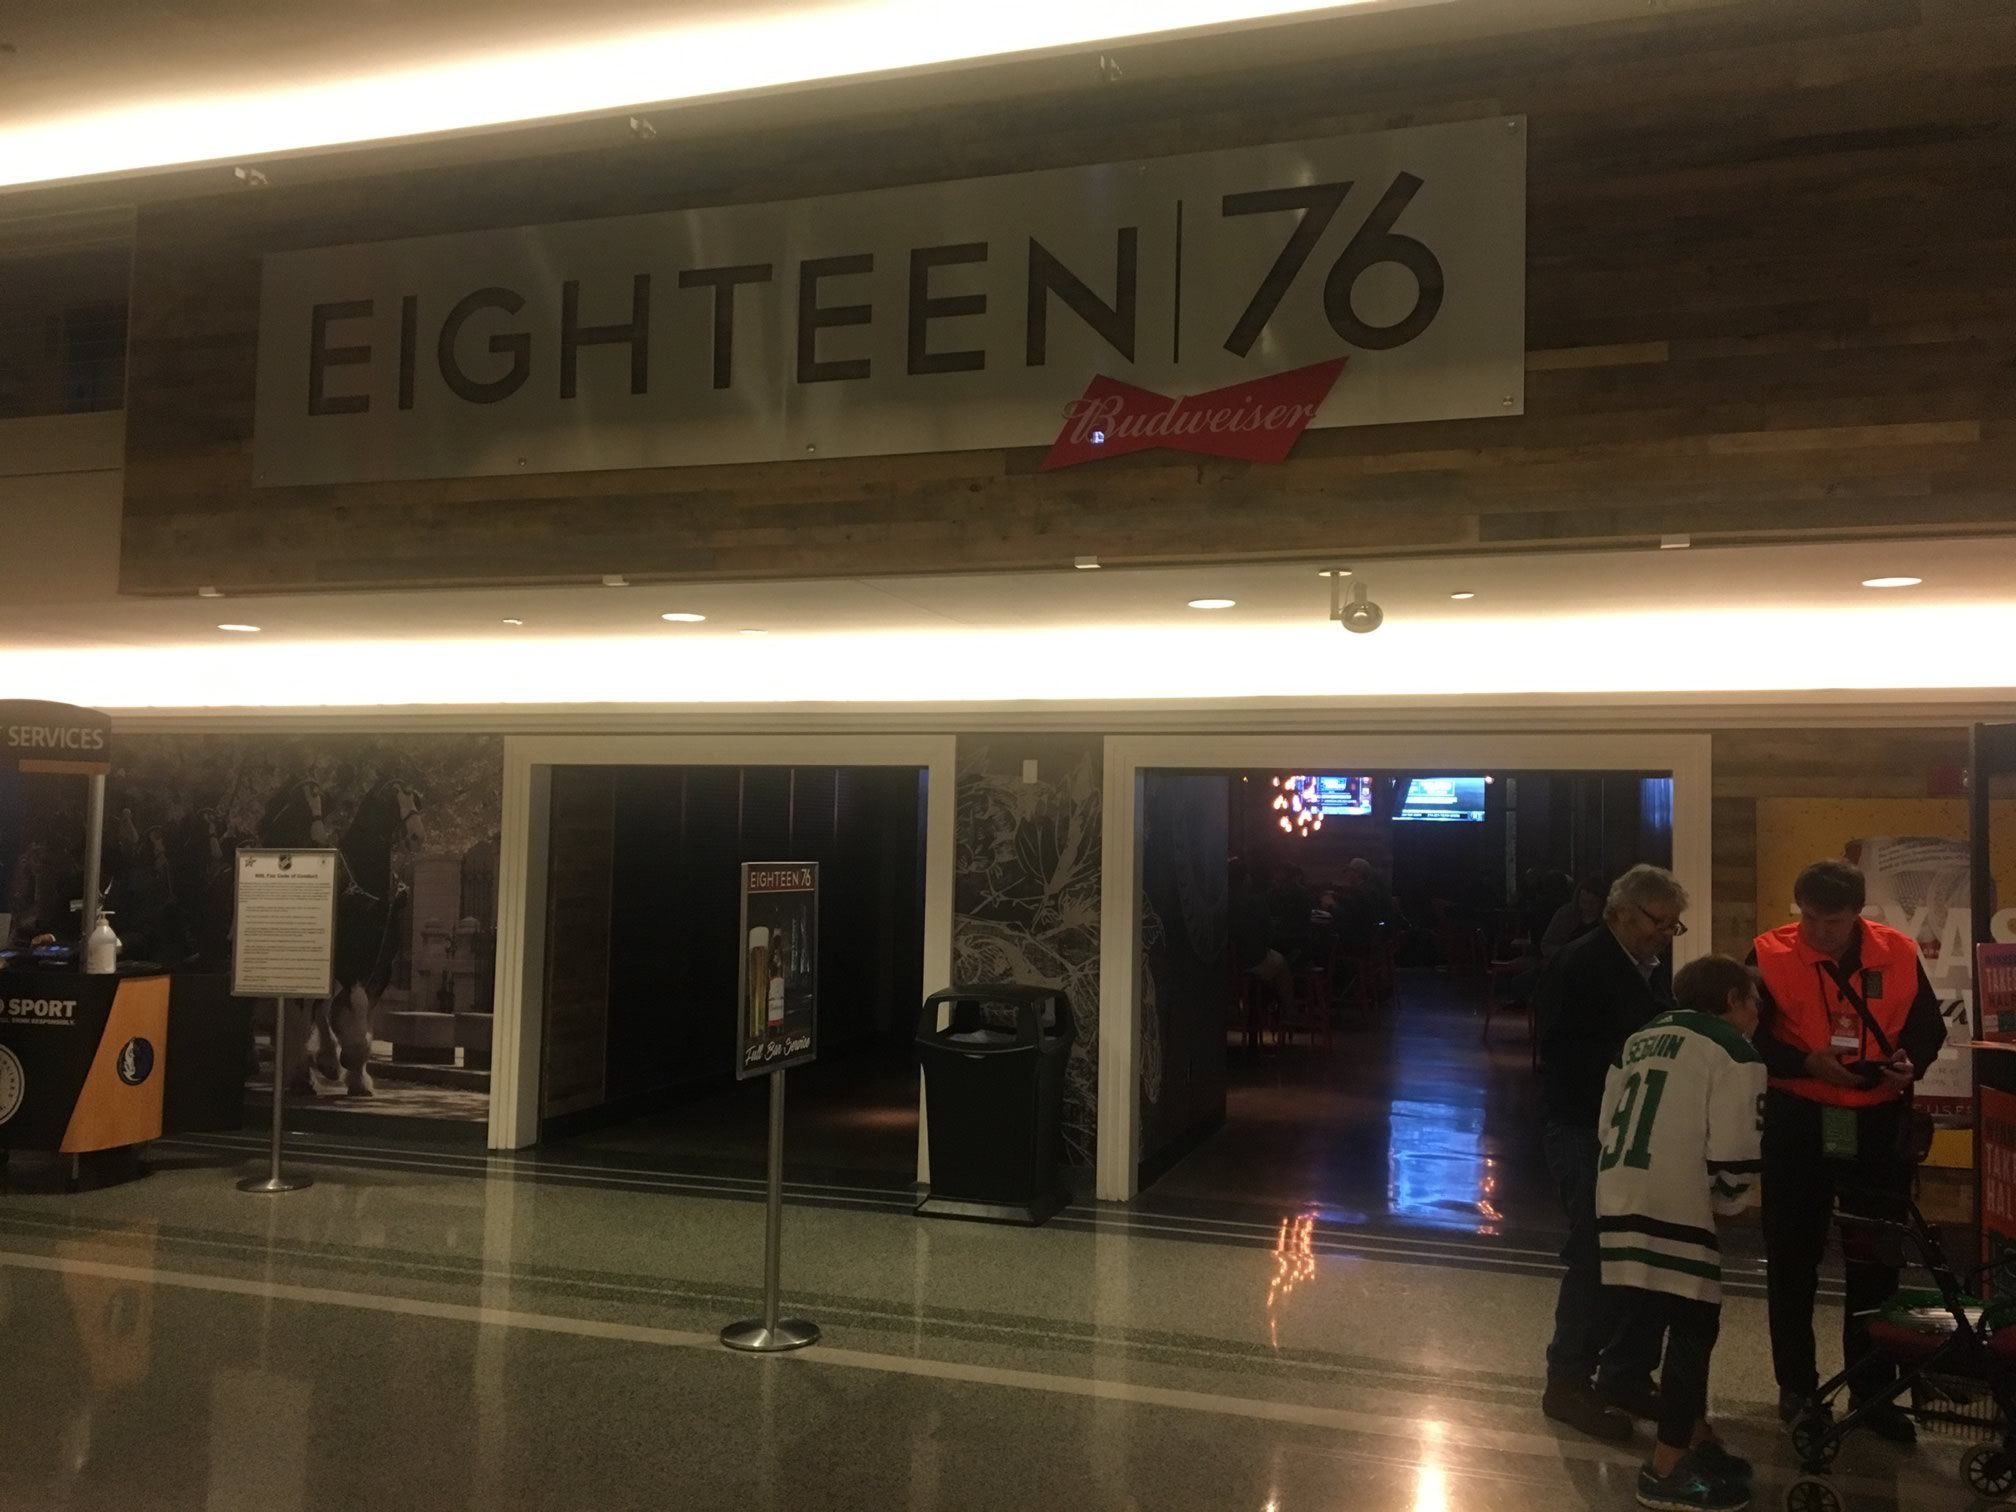 Eighteen 76 American Airlines Center